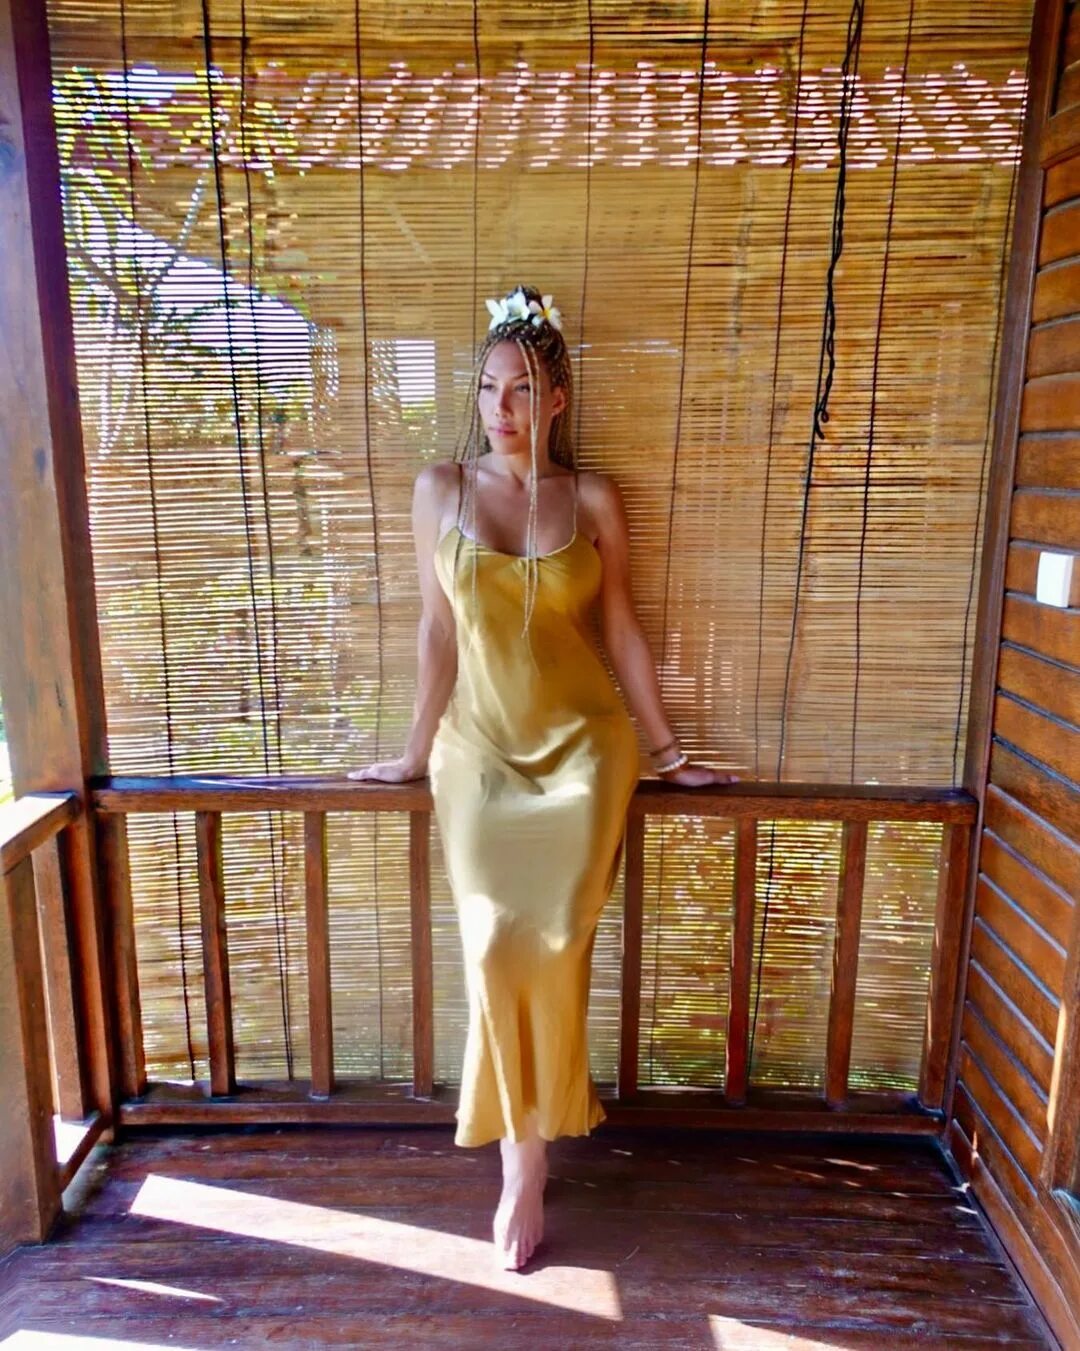 Публикация в Instagram Alyssa Goddess: "A kind of Golden hour one reme...